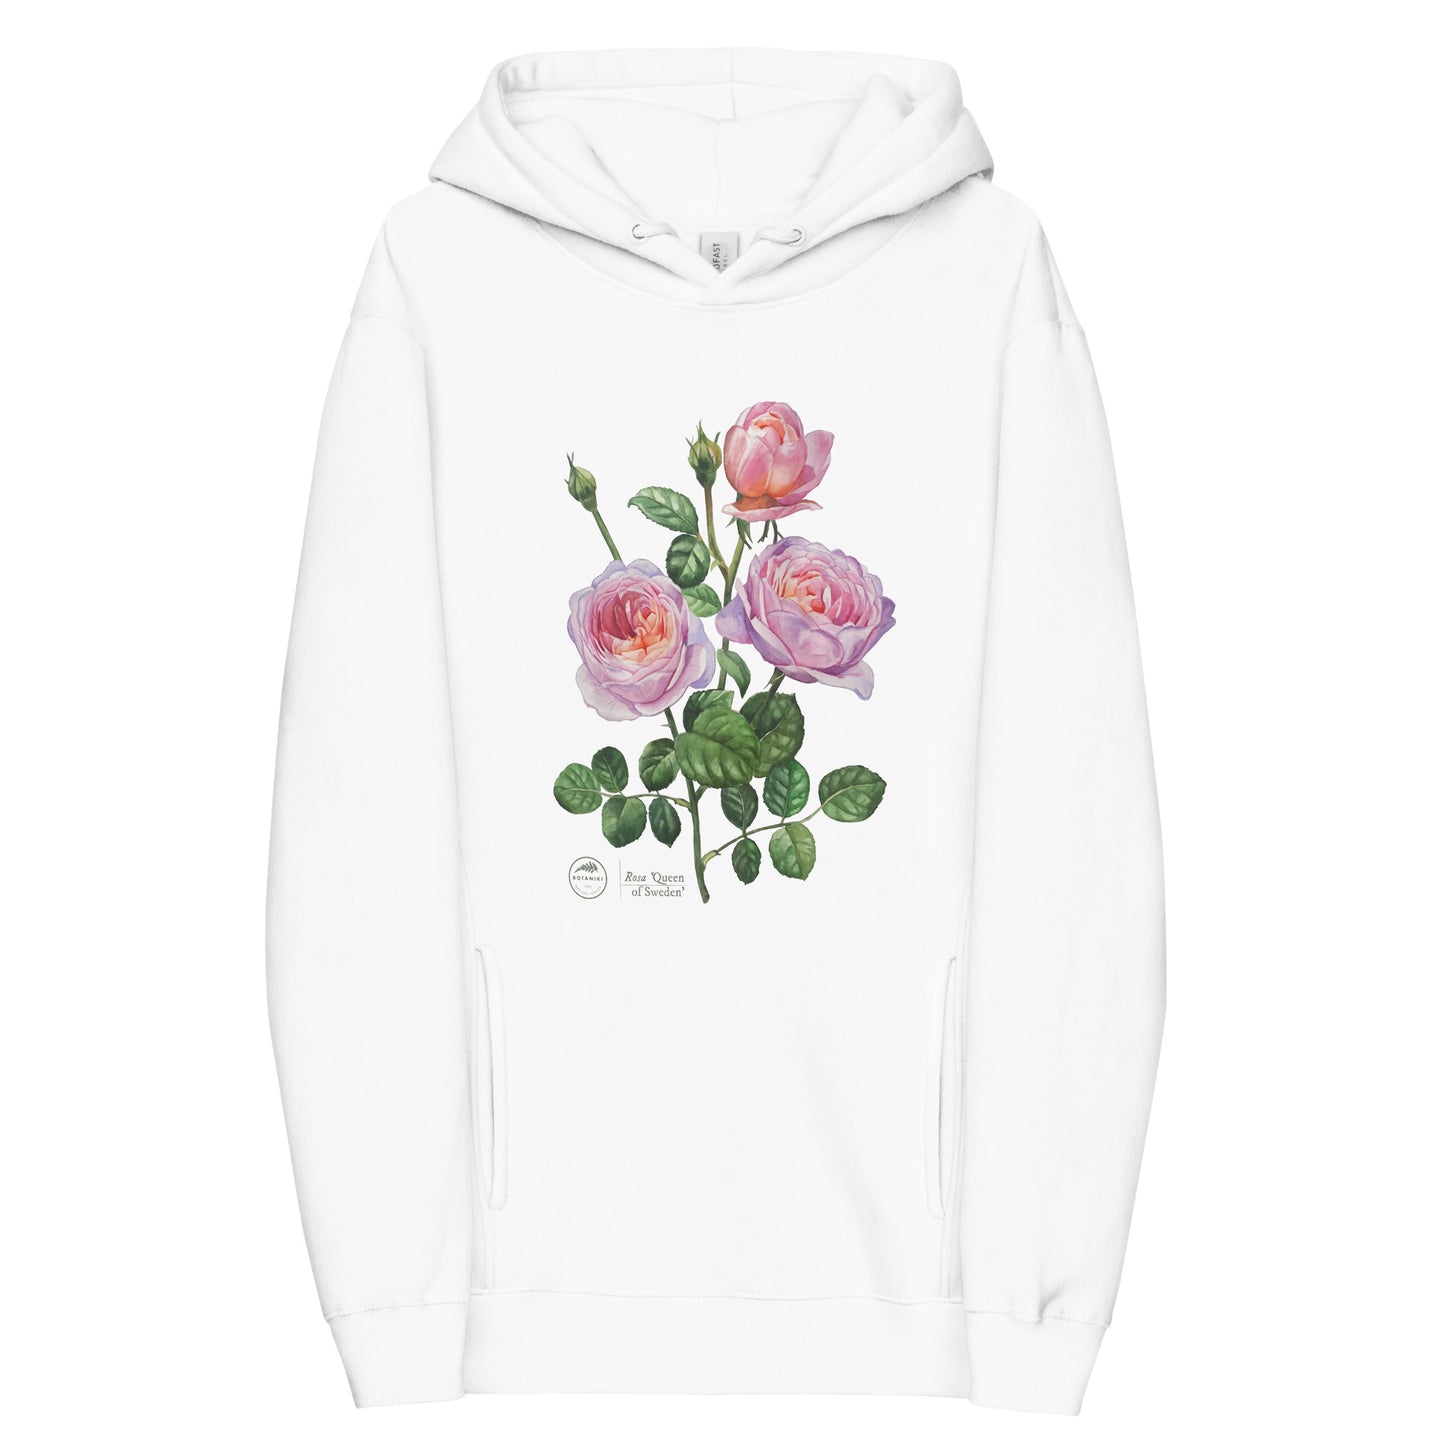 Unisex fashion hoodie - Rose 'Queen of Sweden